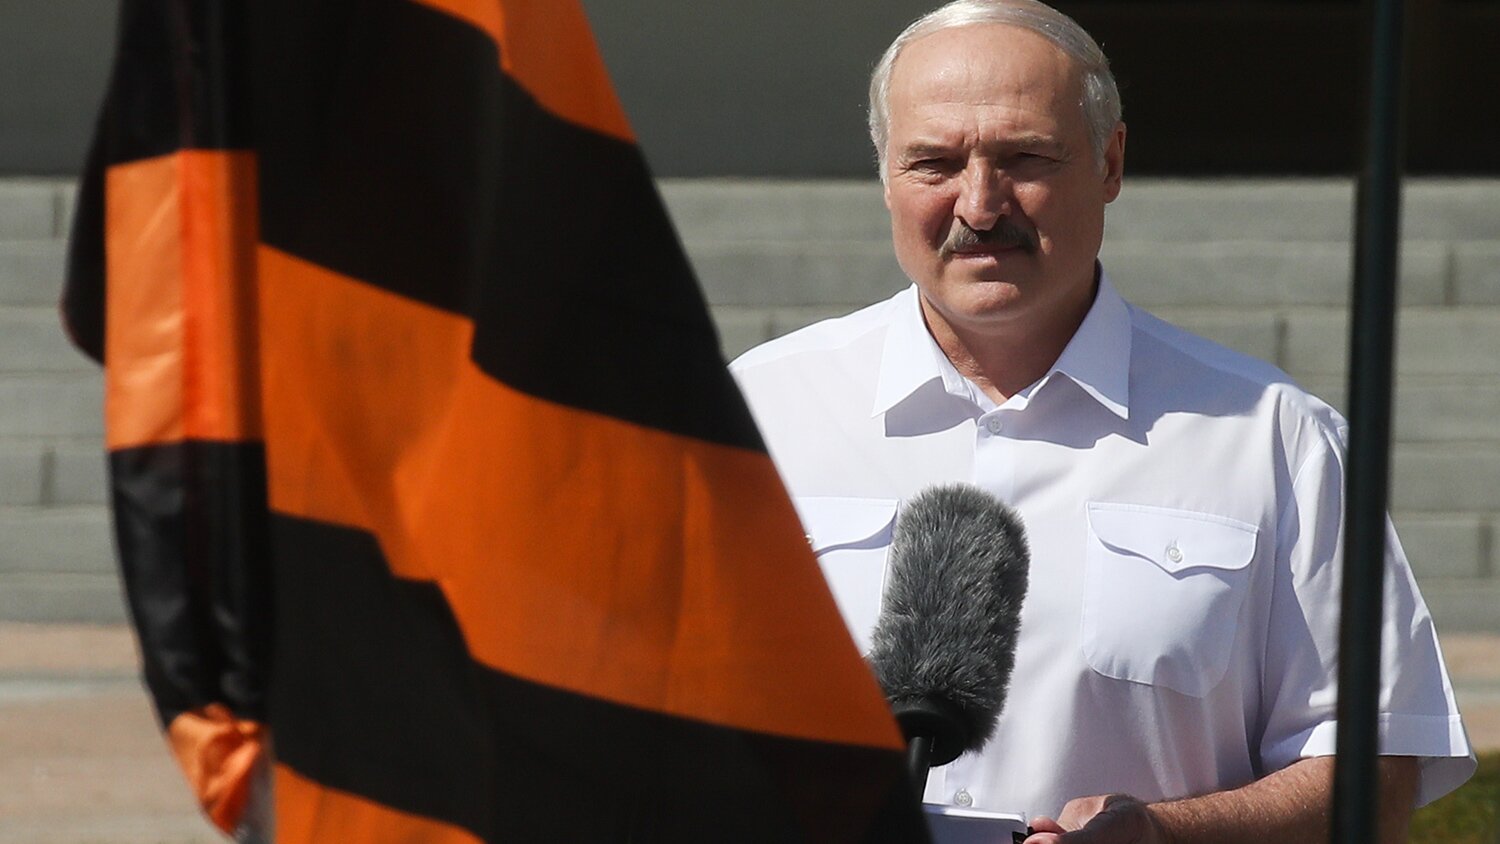 Лукашенко поблагодарил Путина за совет: "Спасибо моему другу"